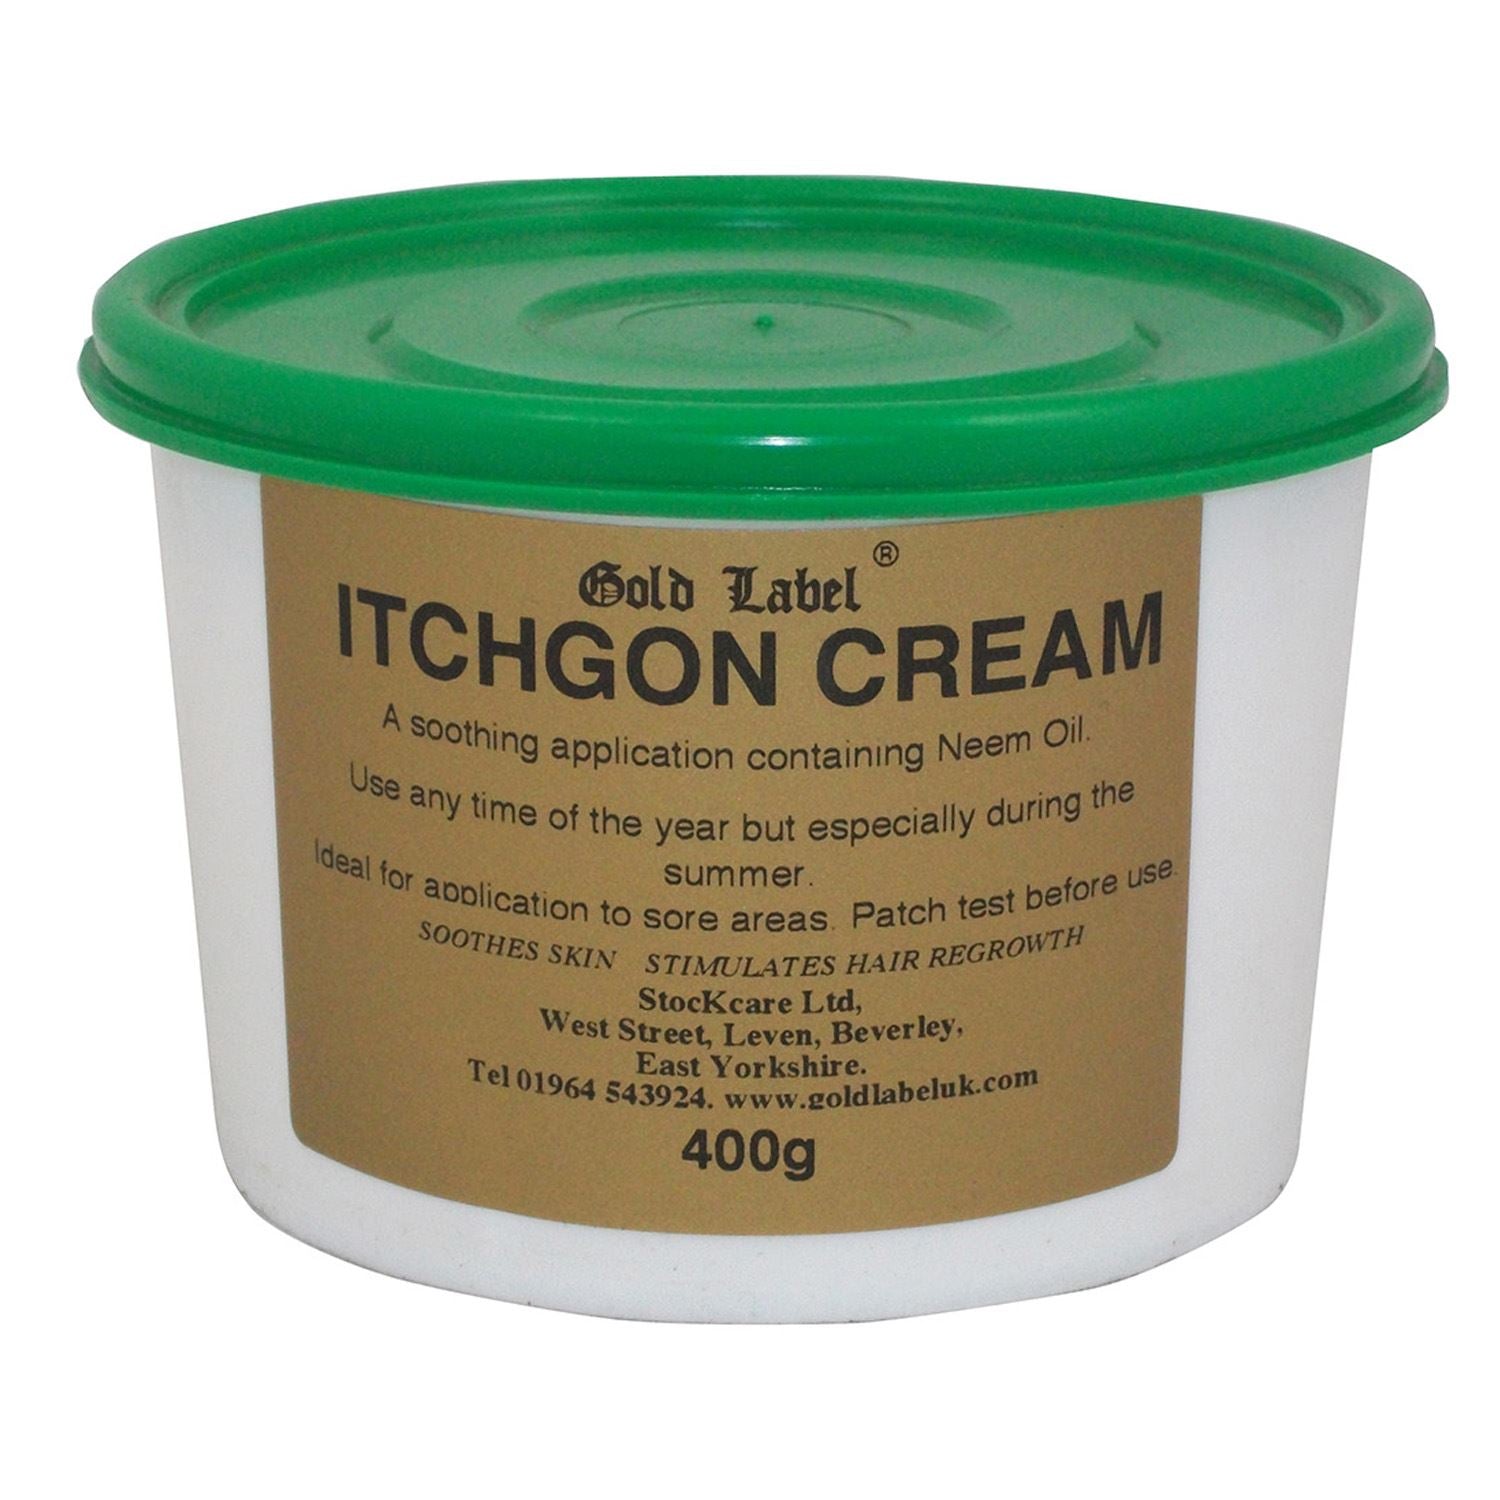 Gold Label Itchgon Cream - Just Horse Riders